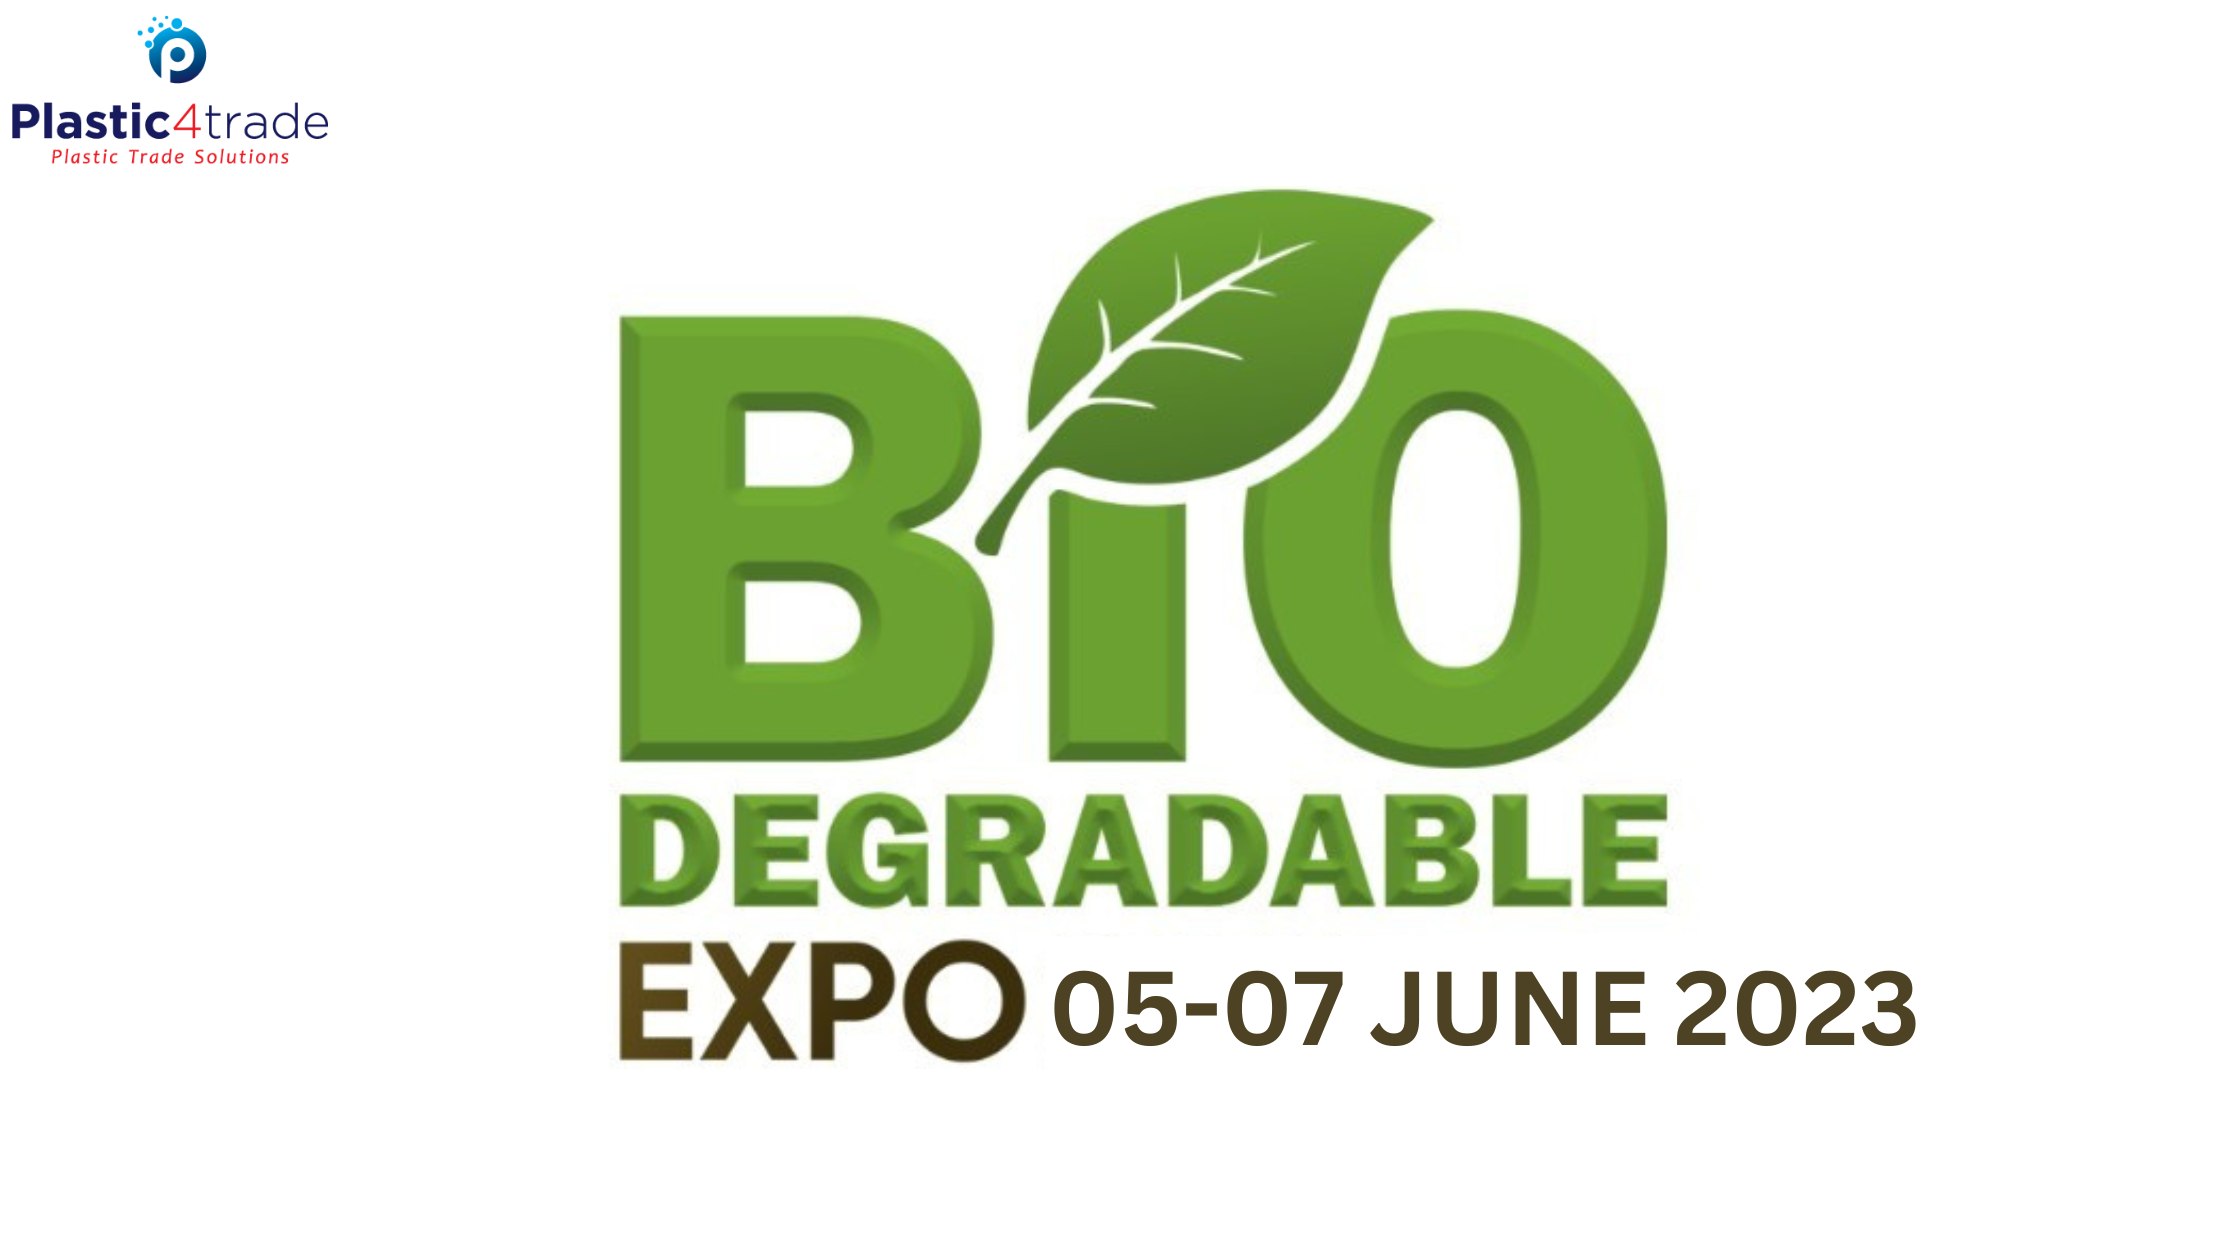 Biodegradable Plastics & Packaging Expo 2023 Plastic4trade